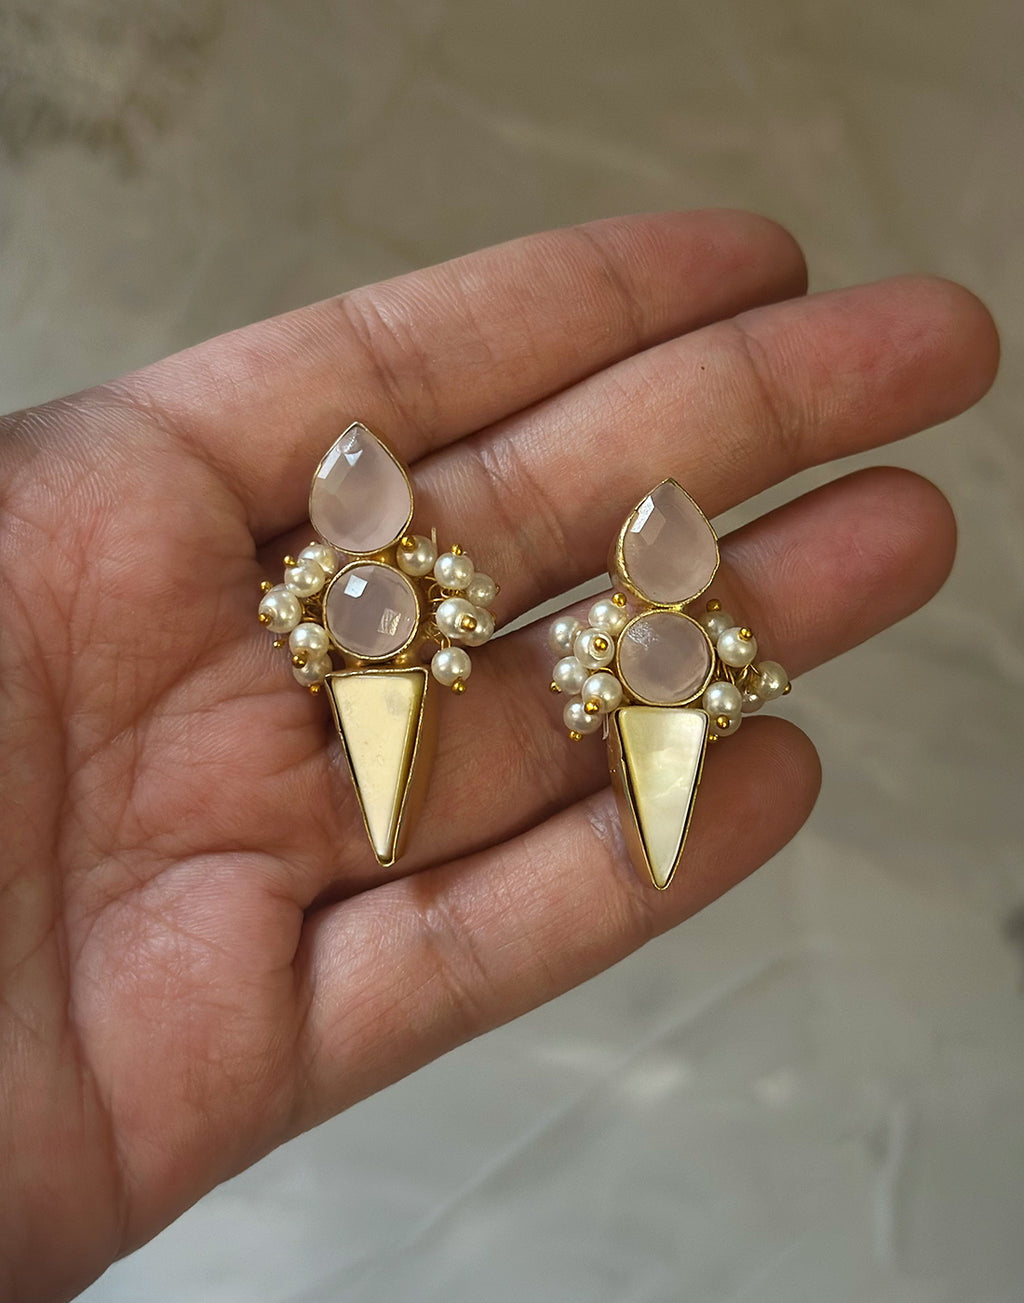 Pink Sorbet Earrings - Statement Earrings - Gold-Plated & Hypoallergenic Jewellery - Made in India - Dubai Jewellery - Dori